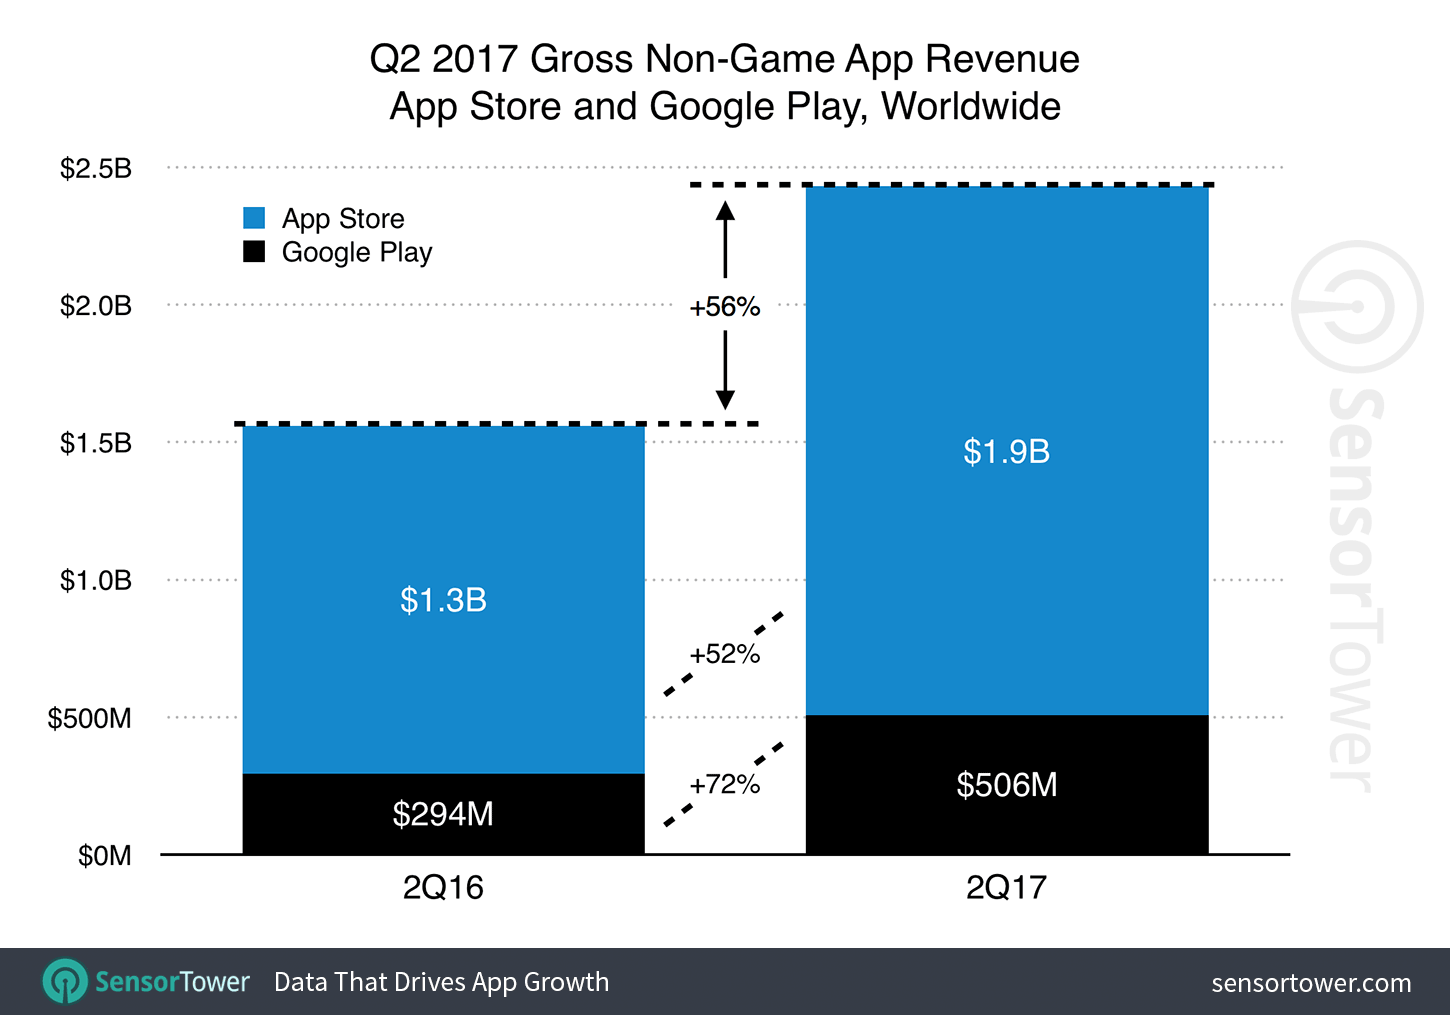 Q2 2017 Apps Worldwide Revenue Growth